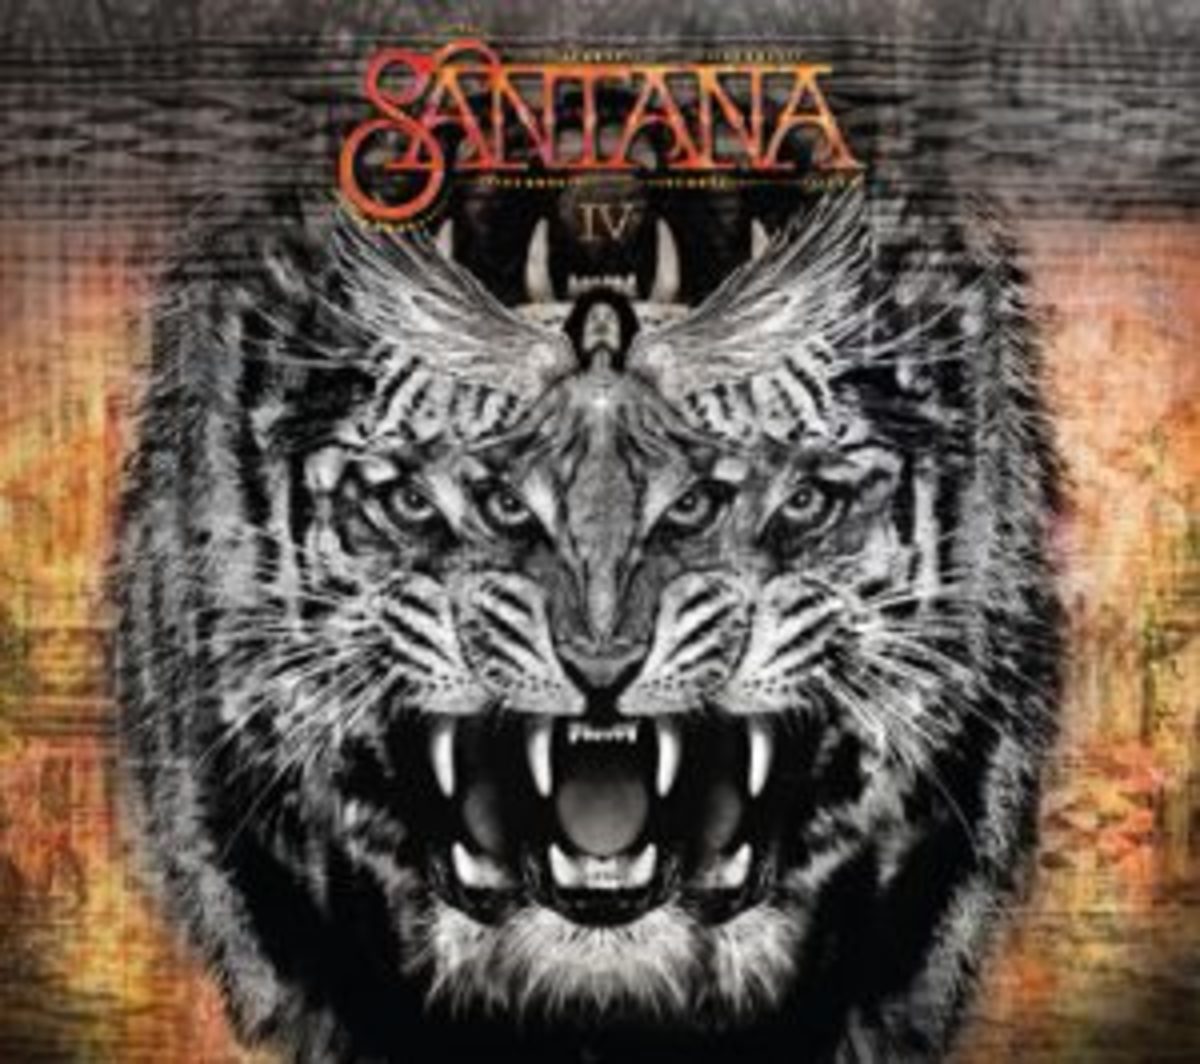 Santana-cover